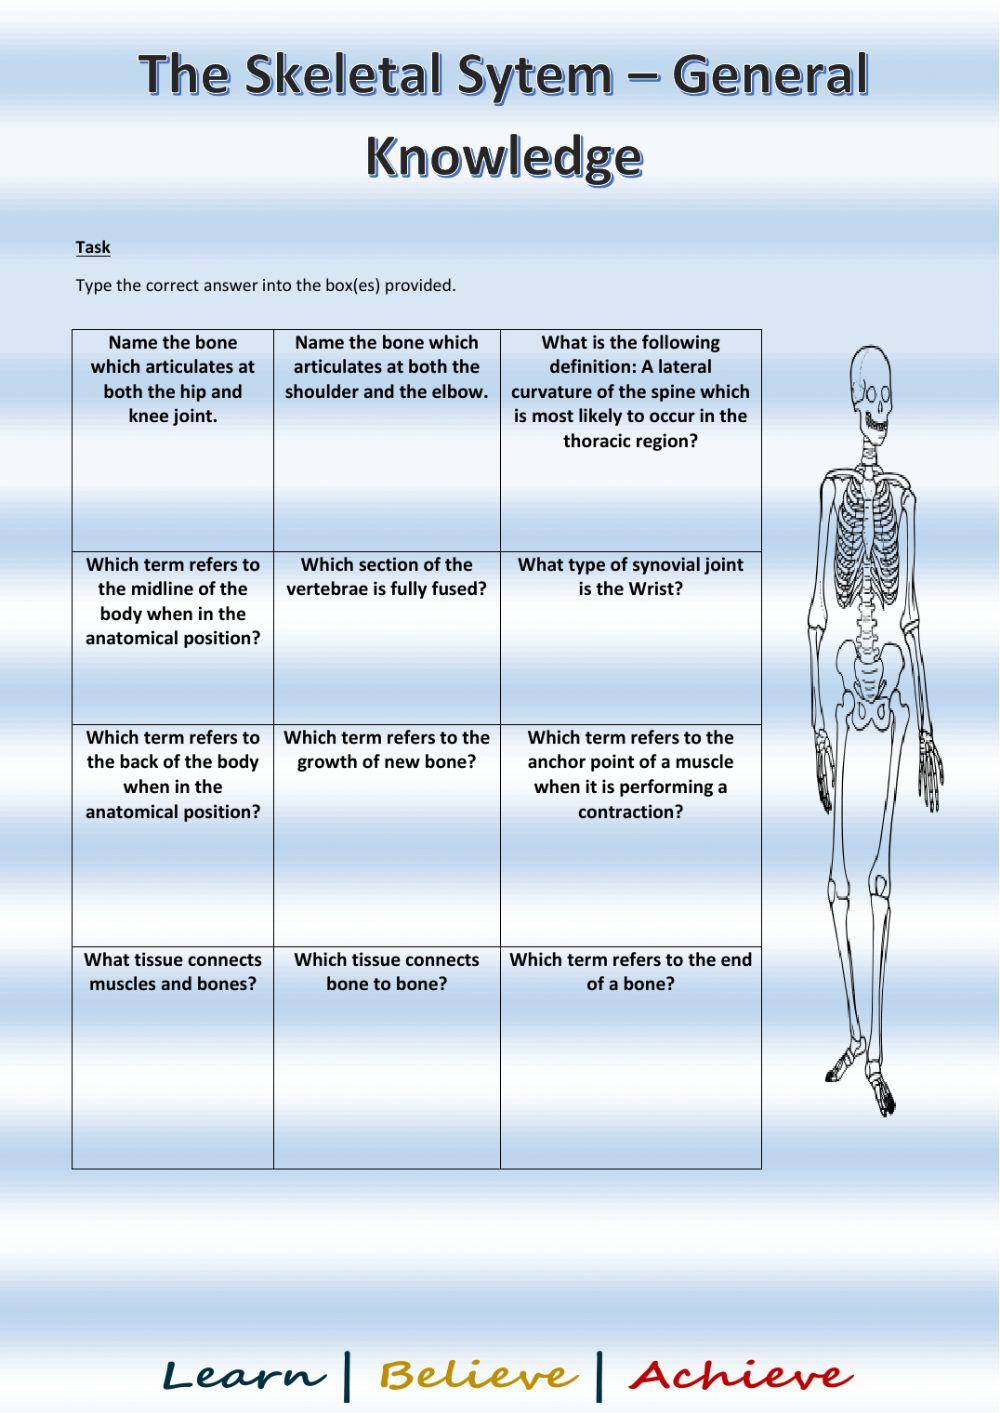 The skeletal system -general knowledge